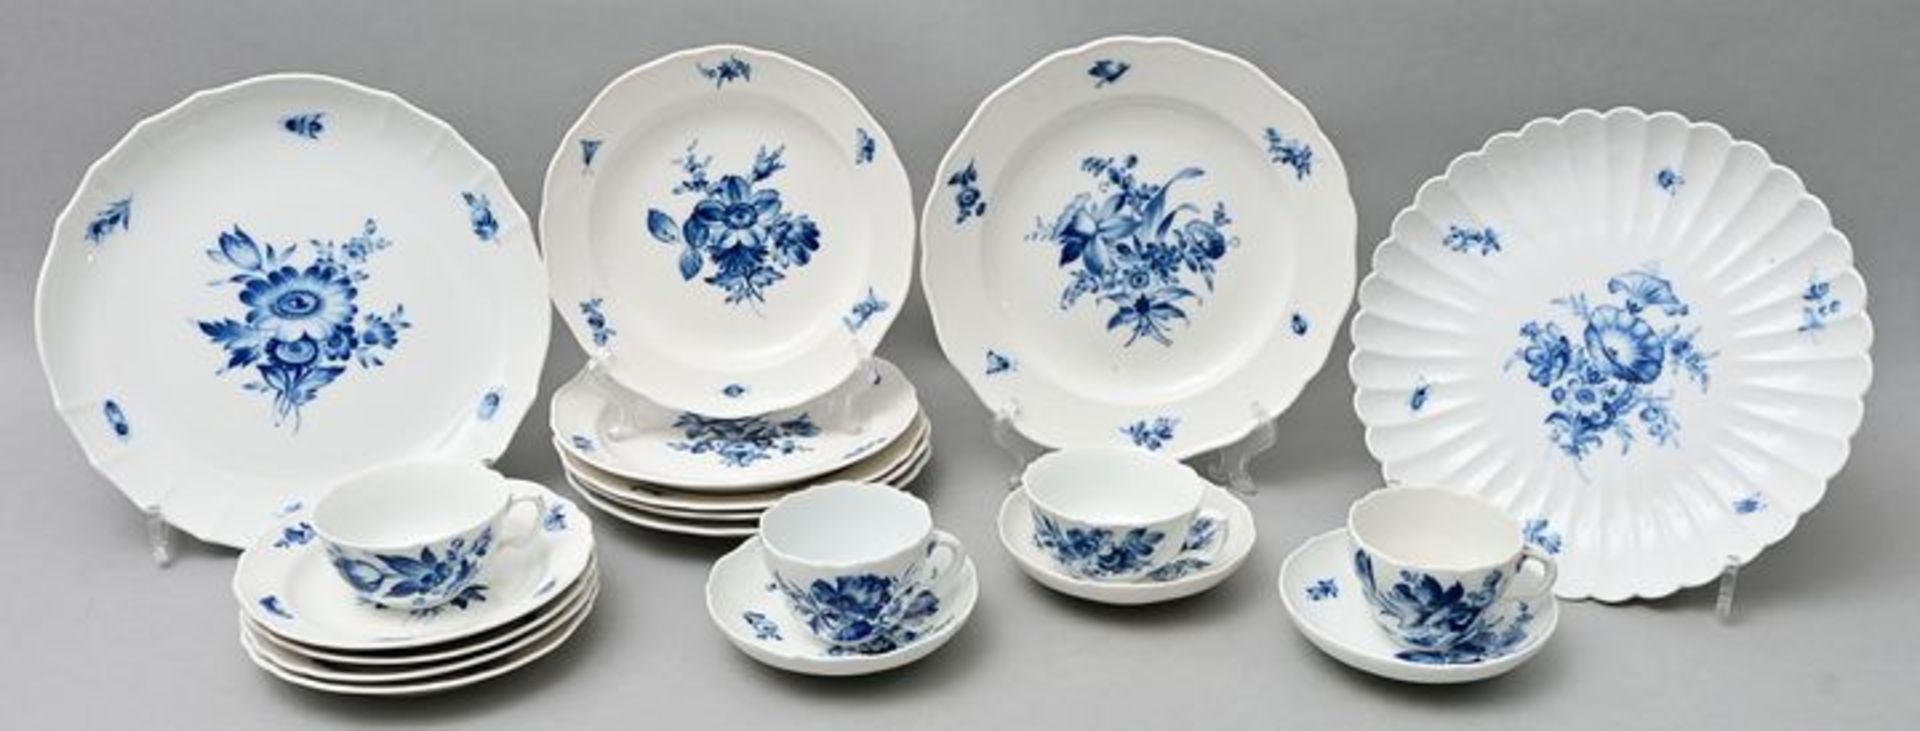 Posten Porzellangeschirr/ items of porcelain dishes